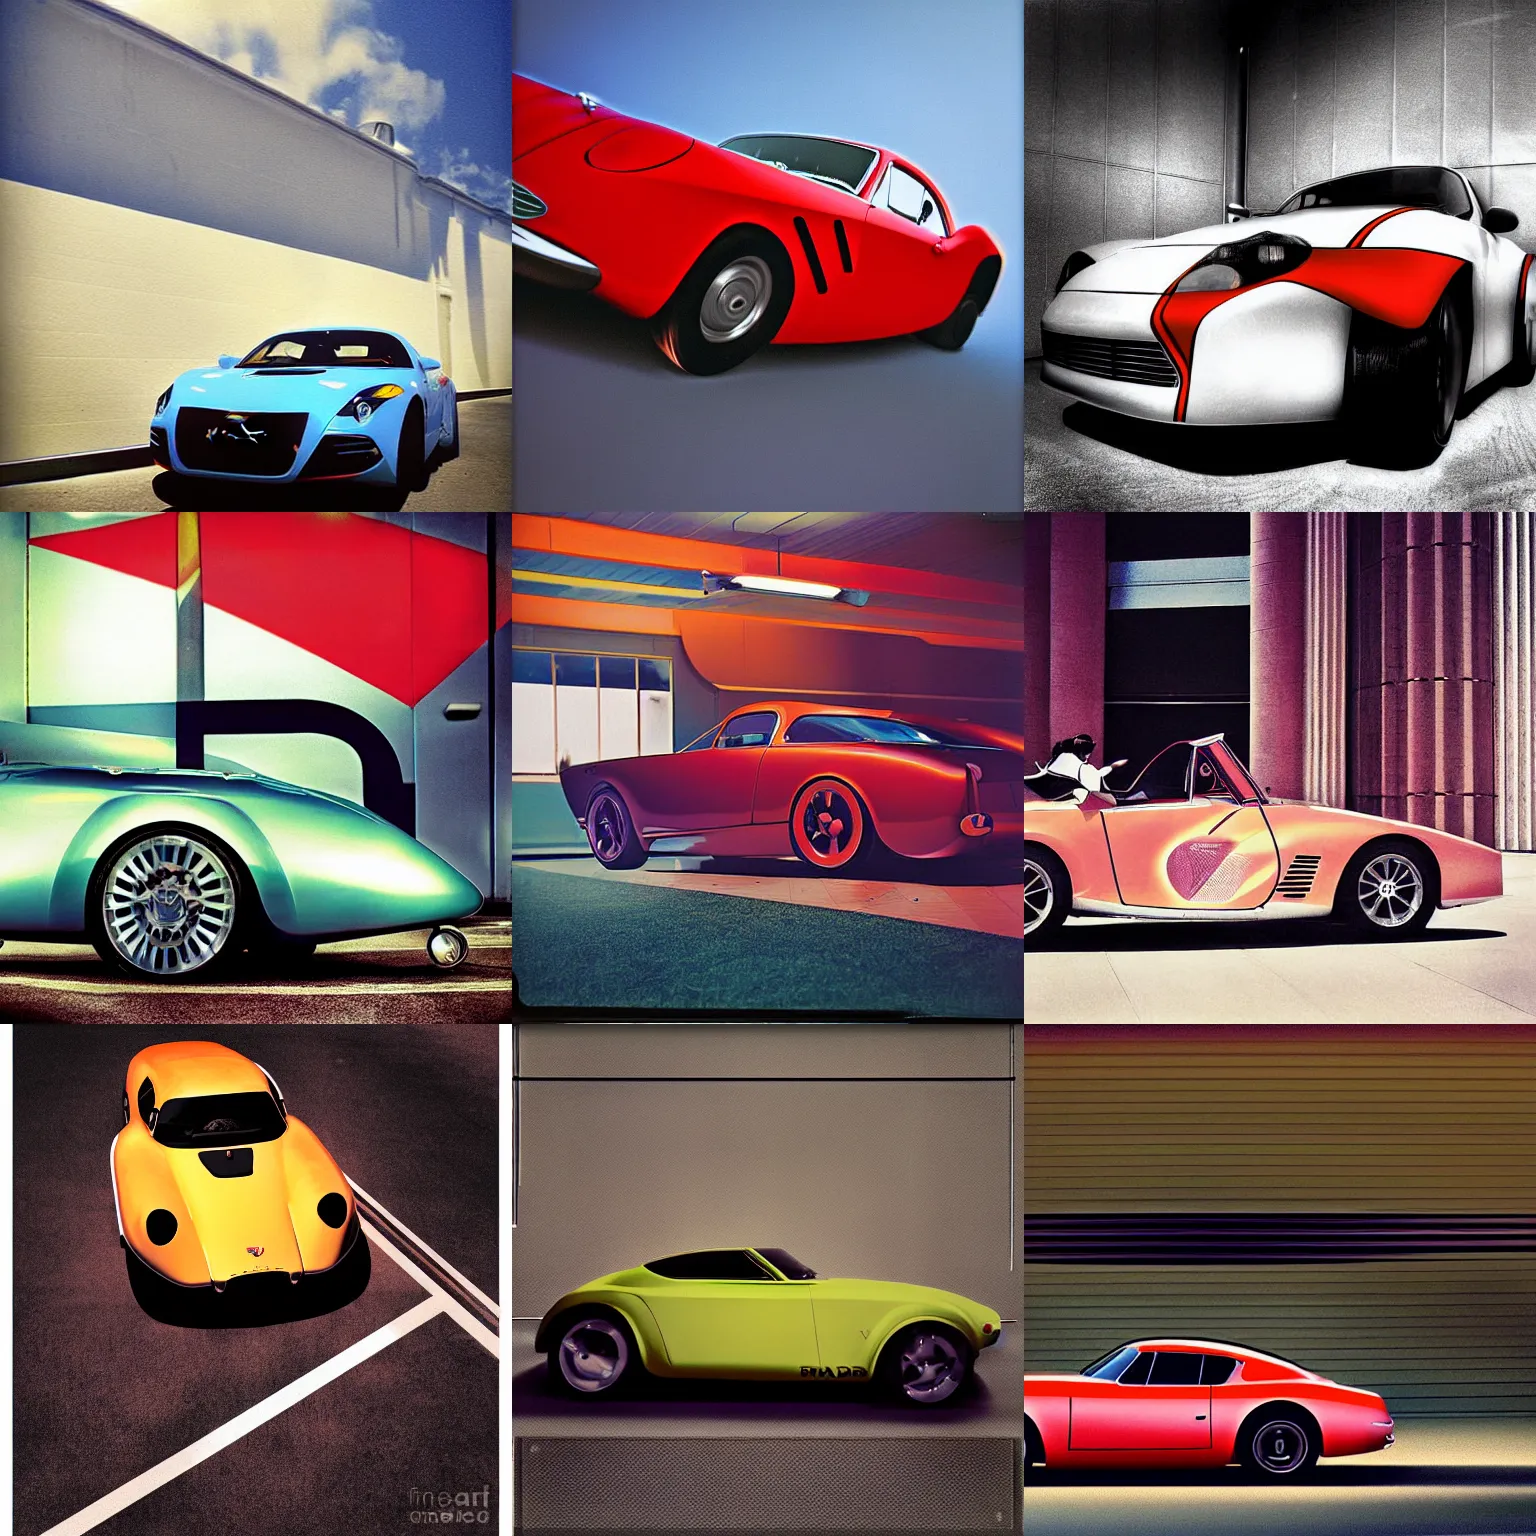 Prompt: stylized poster of a Prada sports car, ektachrome photograph, volumetric lighting, f8 aperture